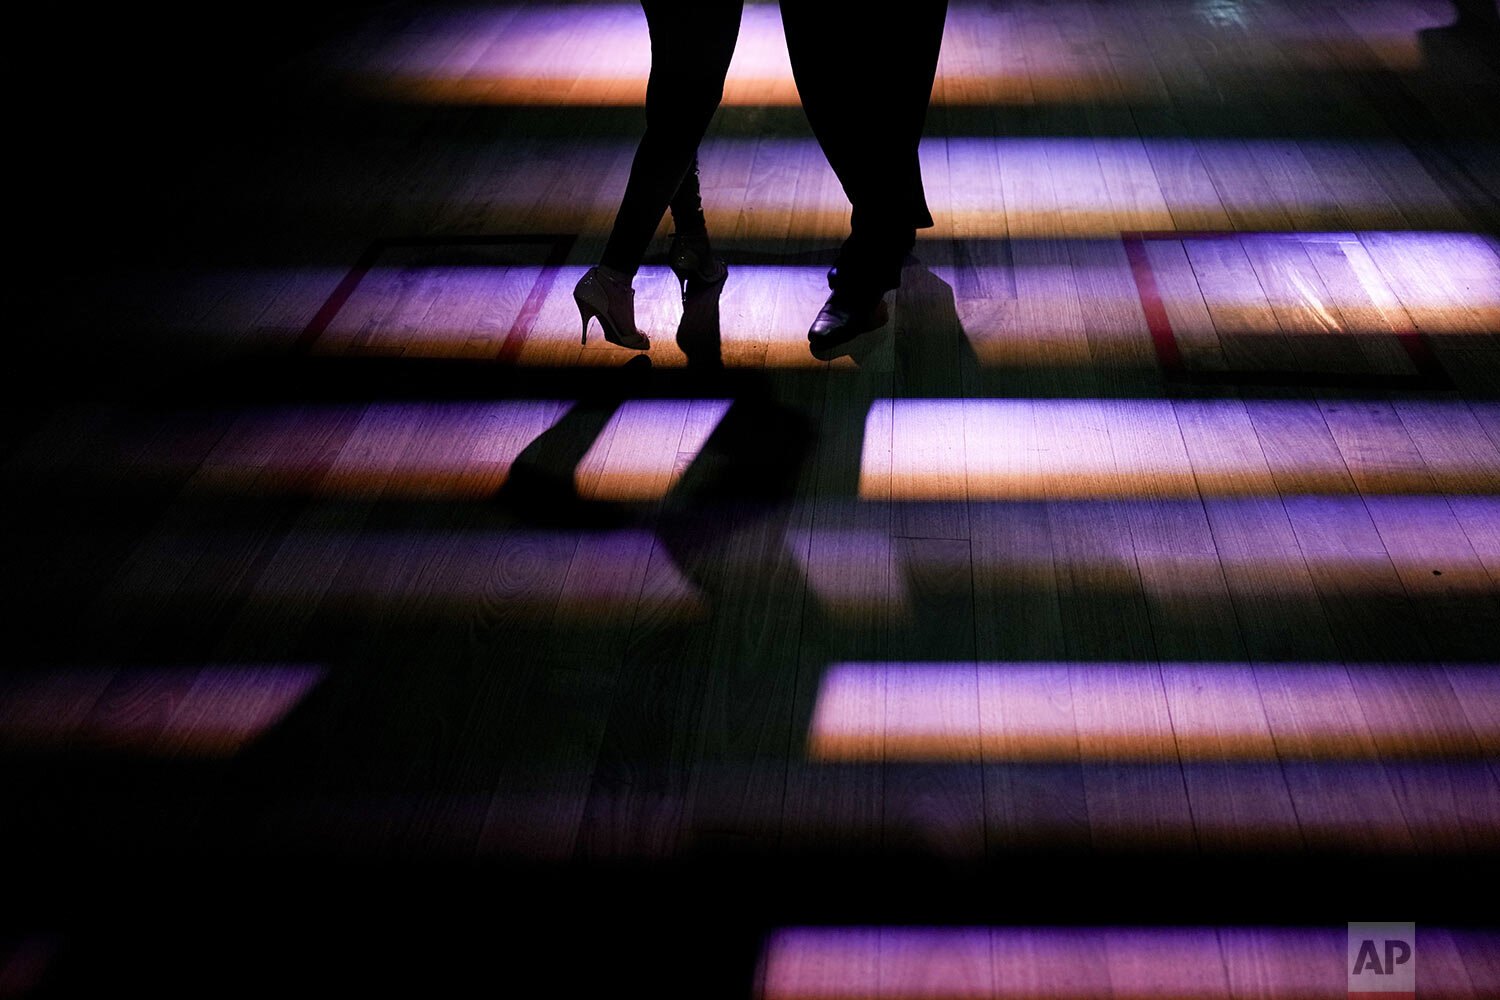  A couple dances tango at a milonga venue in Buenos Aires, Argentina, Sept. 23, 2021. (AP Photo/Natacha Pisarenko) 